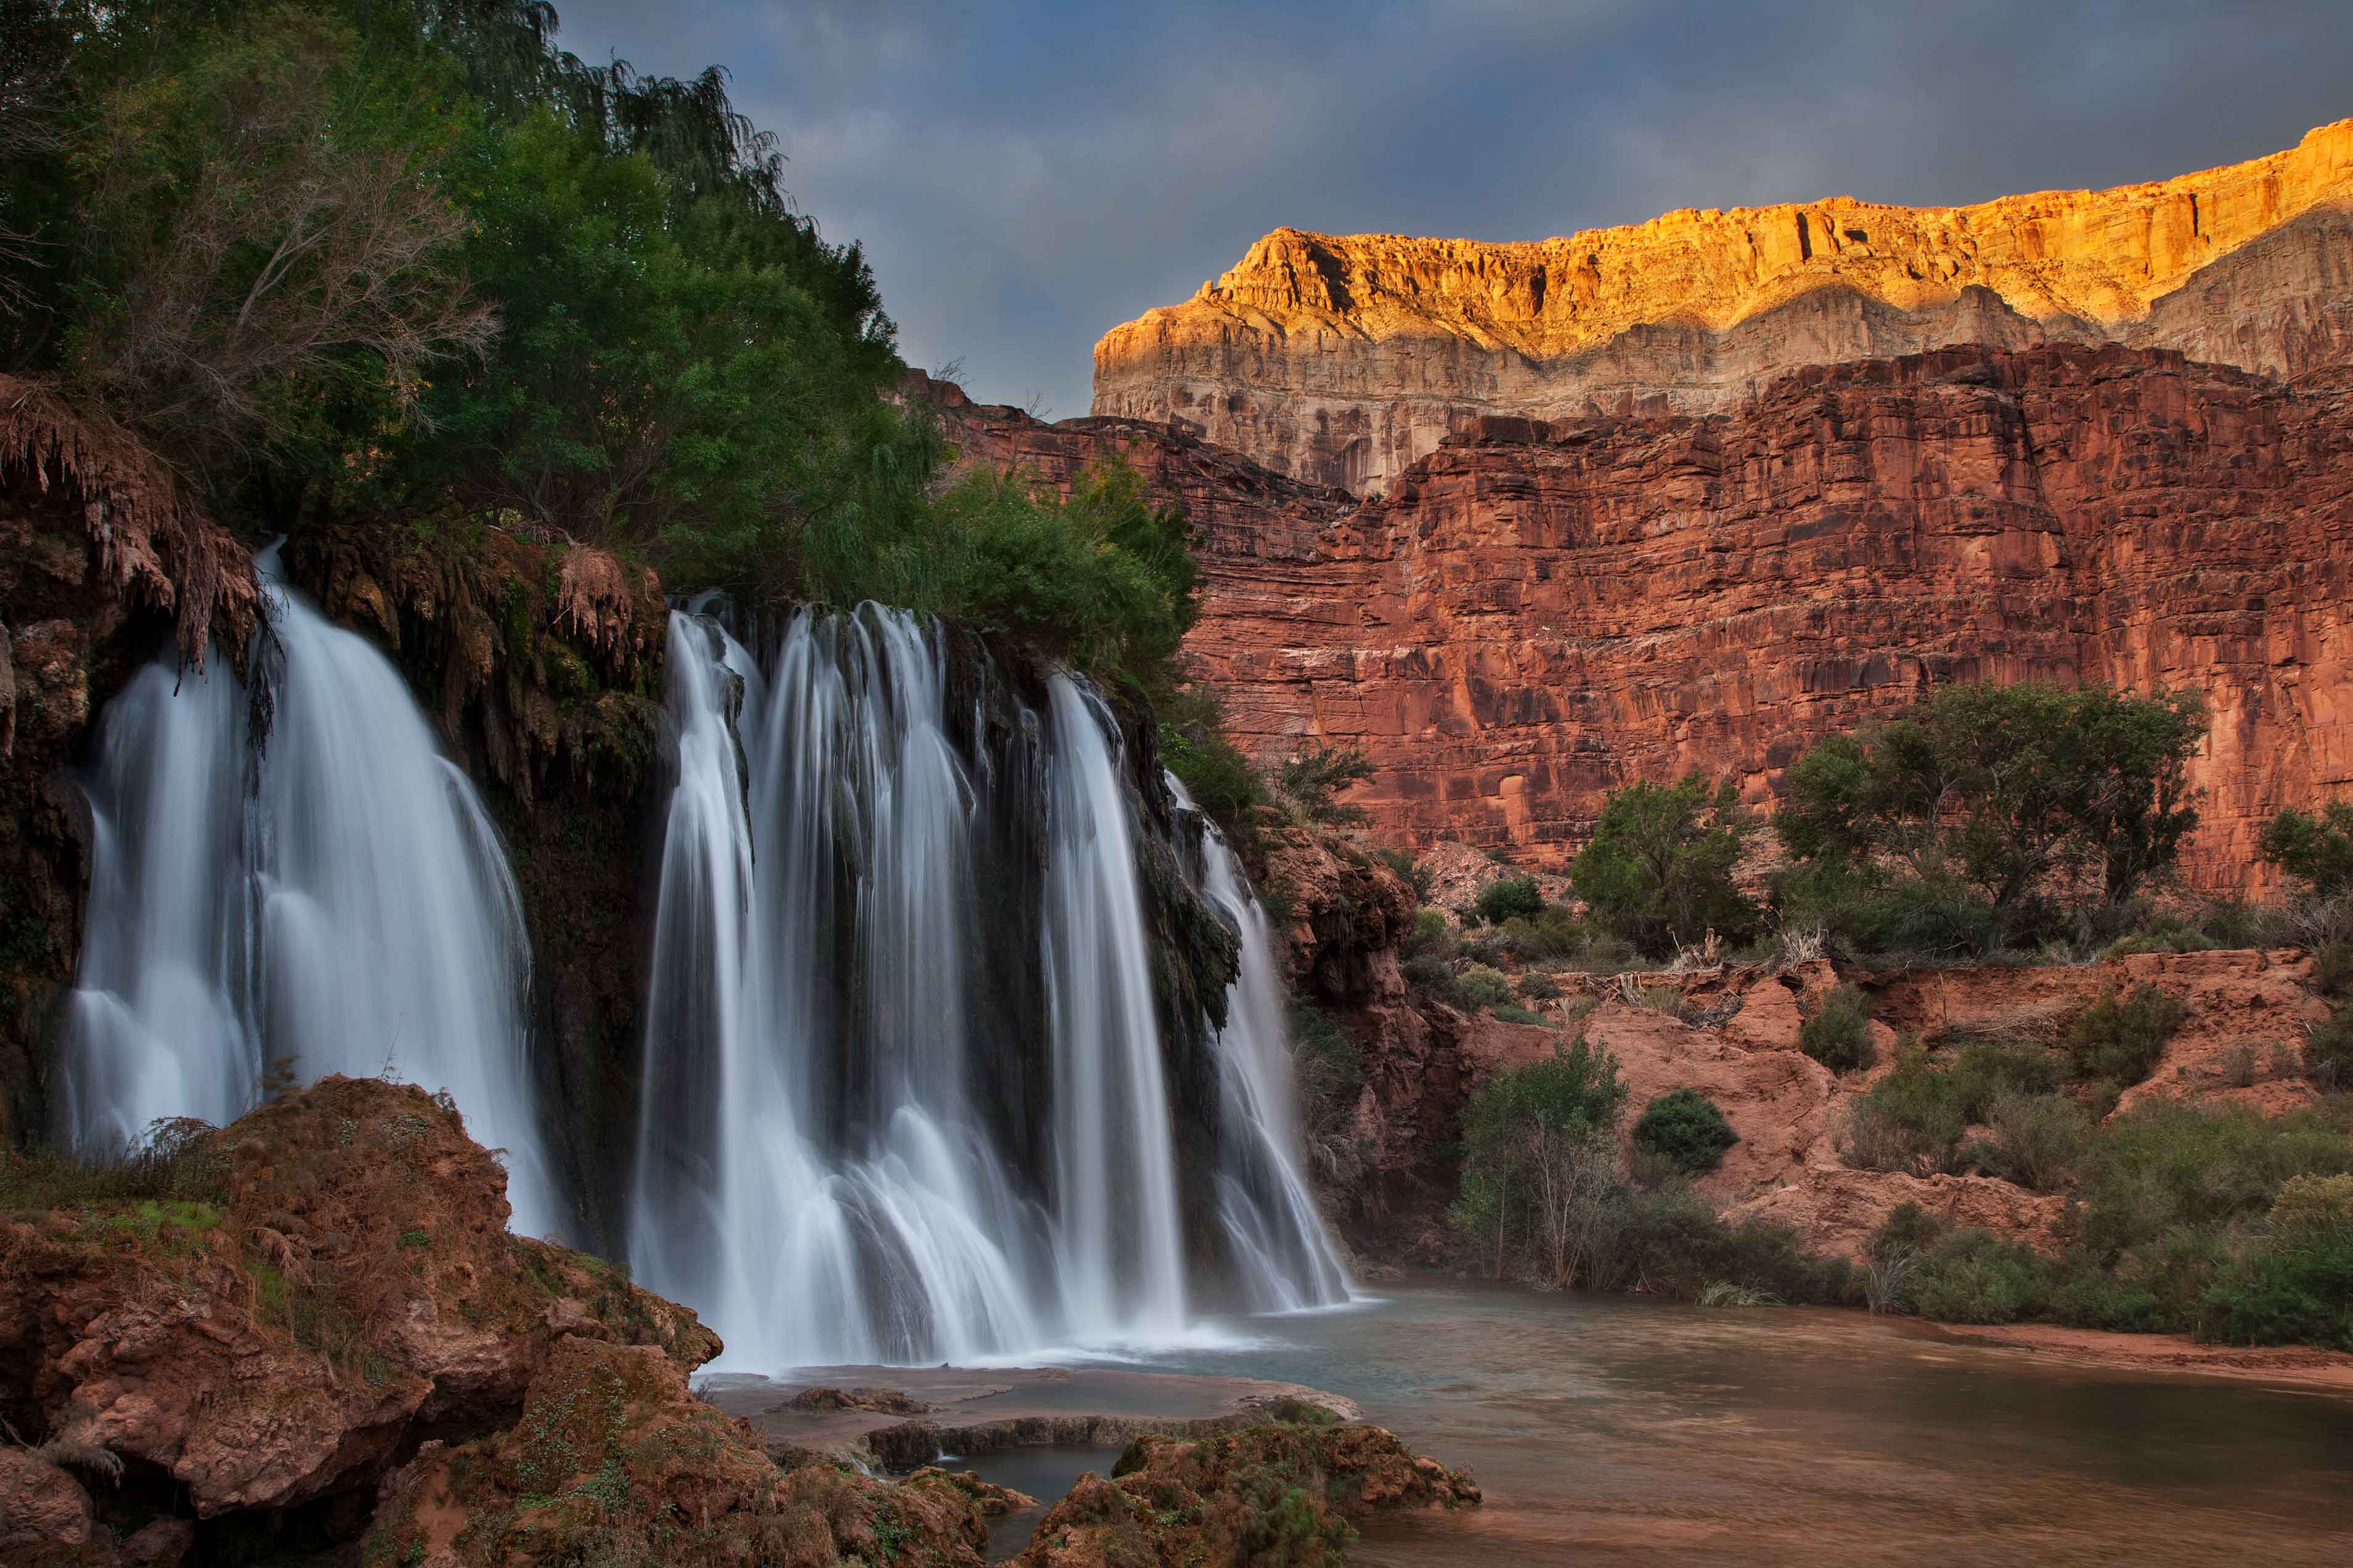 Upper Navajo Falls (a.k.a. Fifty Foot Falls) in Havasu Canyon in the Grand Canyon, Arizona.